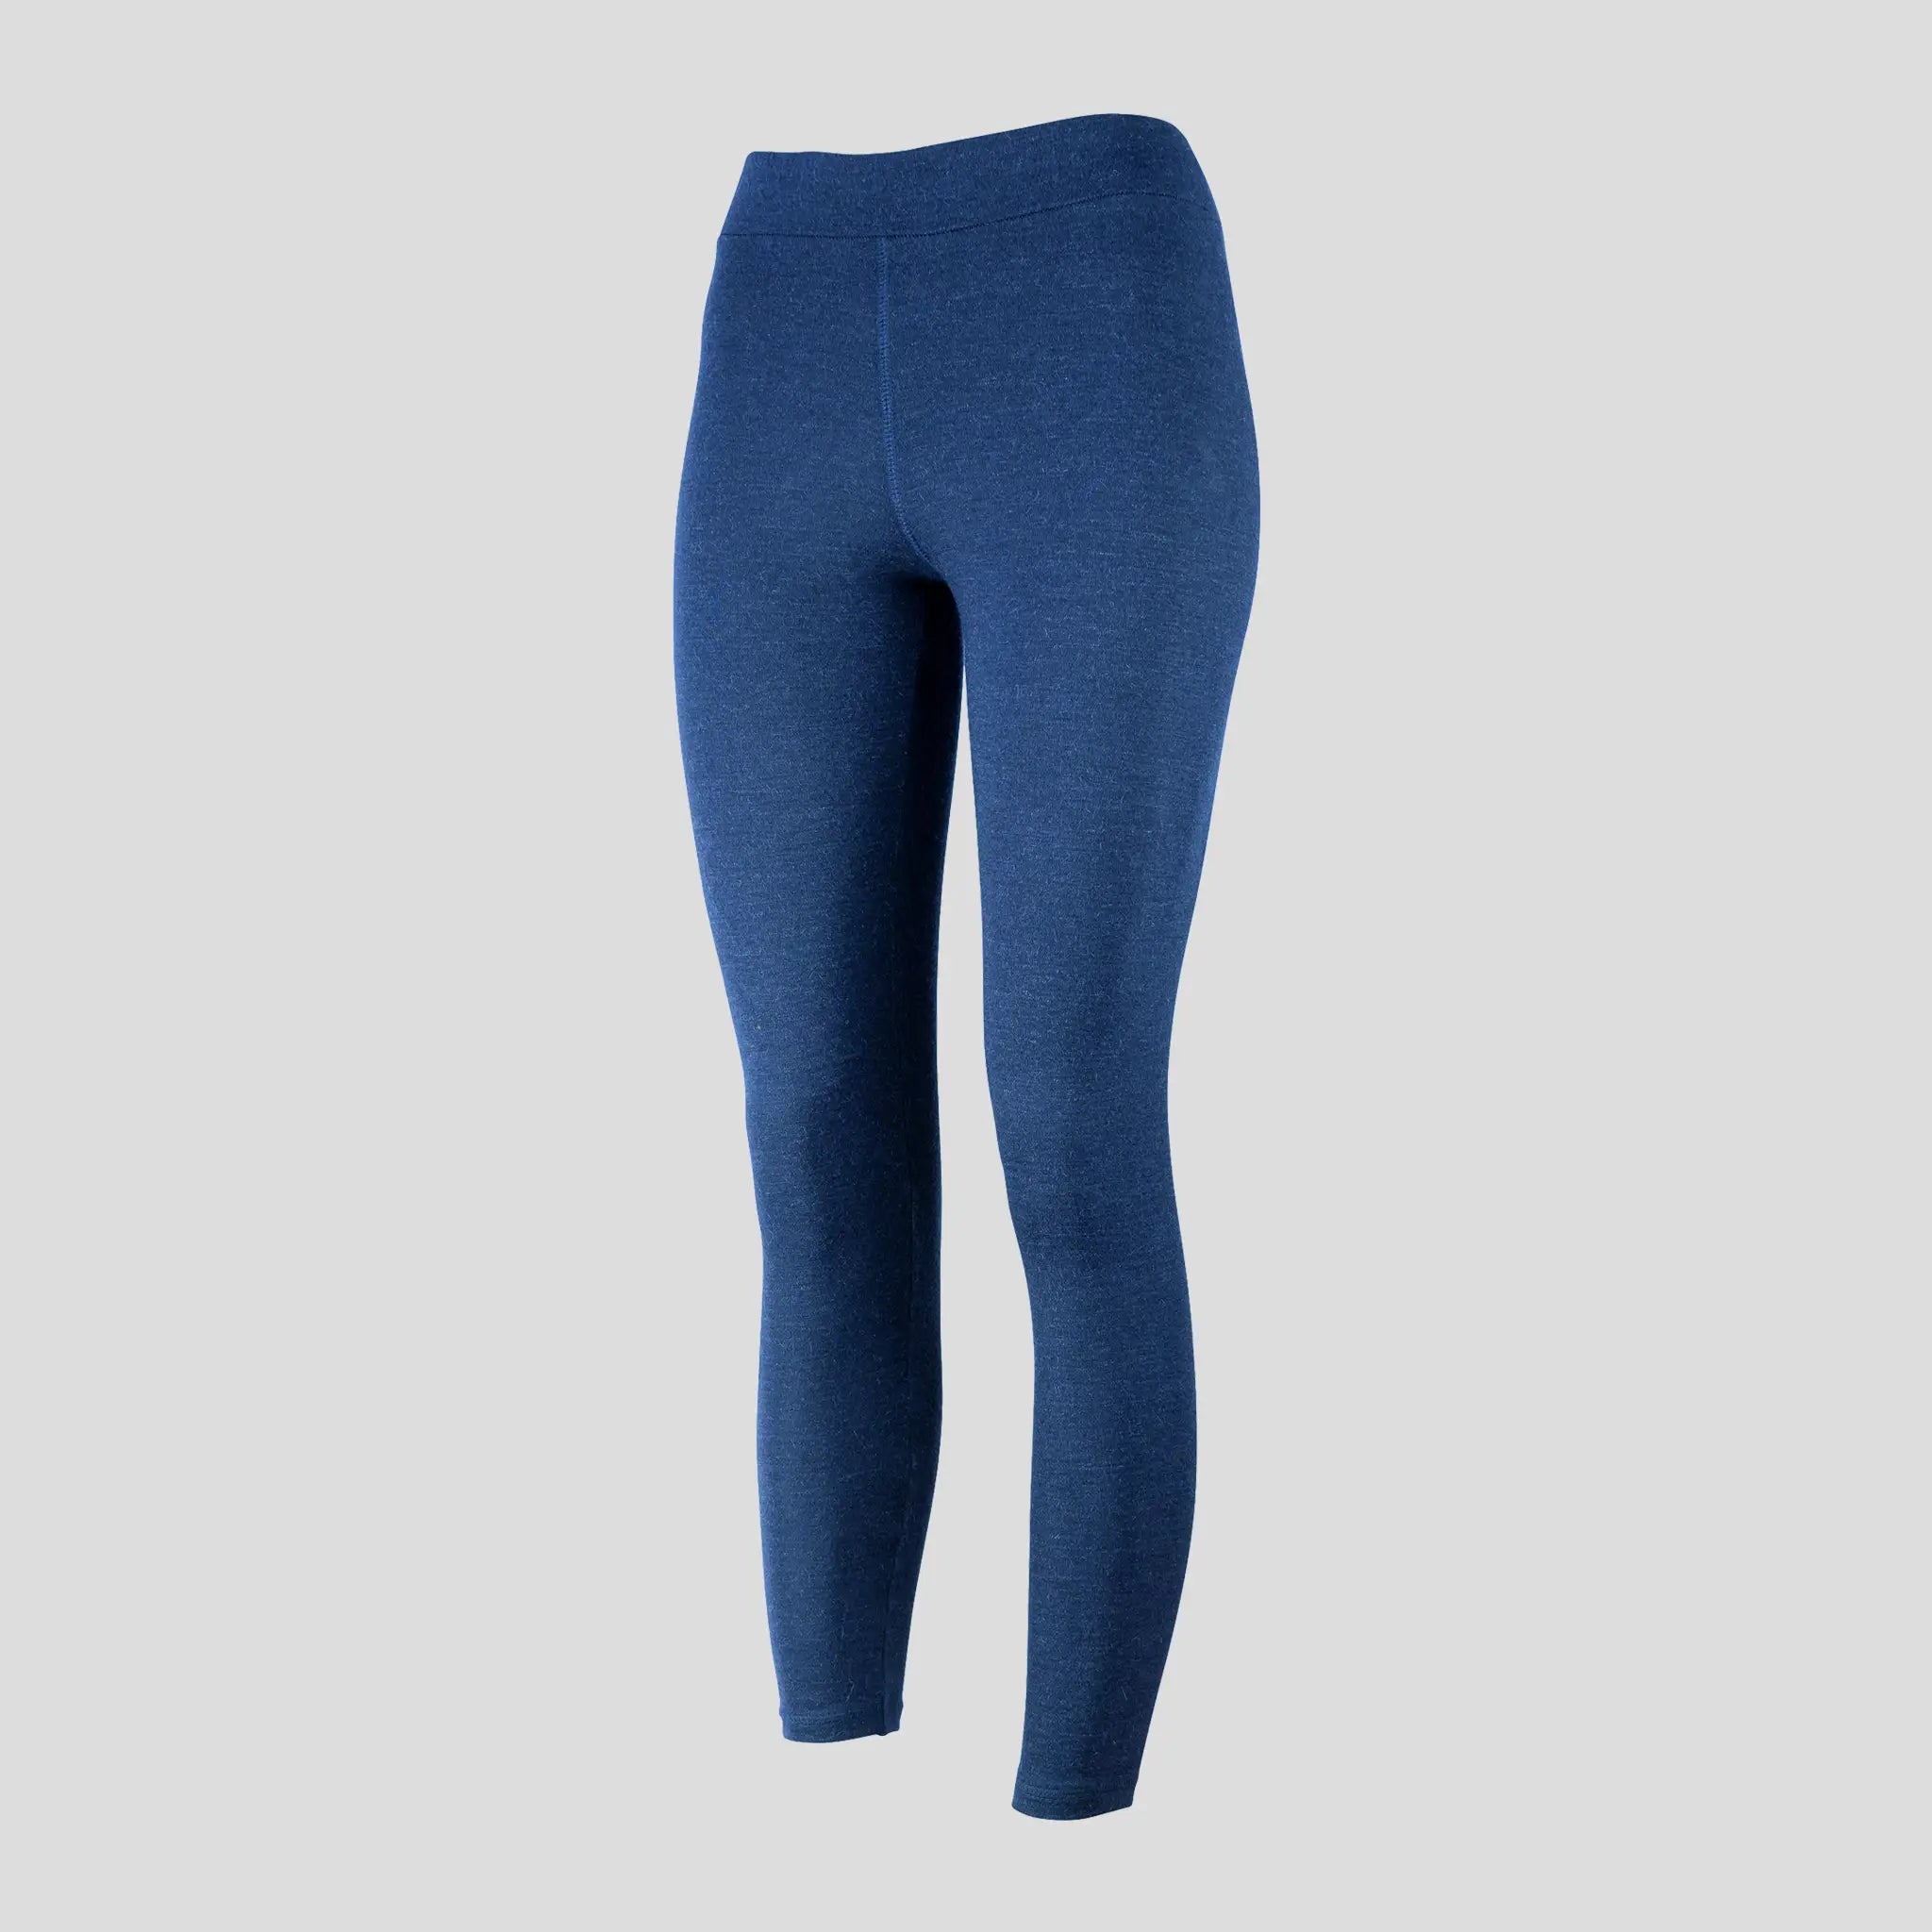 Women's Alpaca Wool Leggings: 300 Lightweight color natural blue